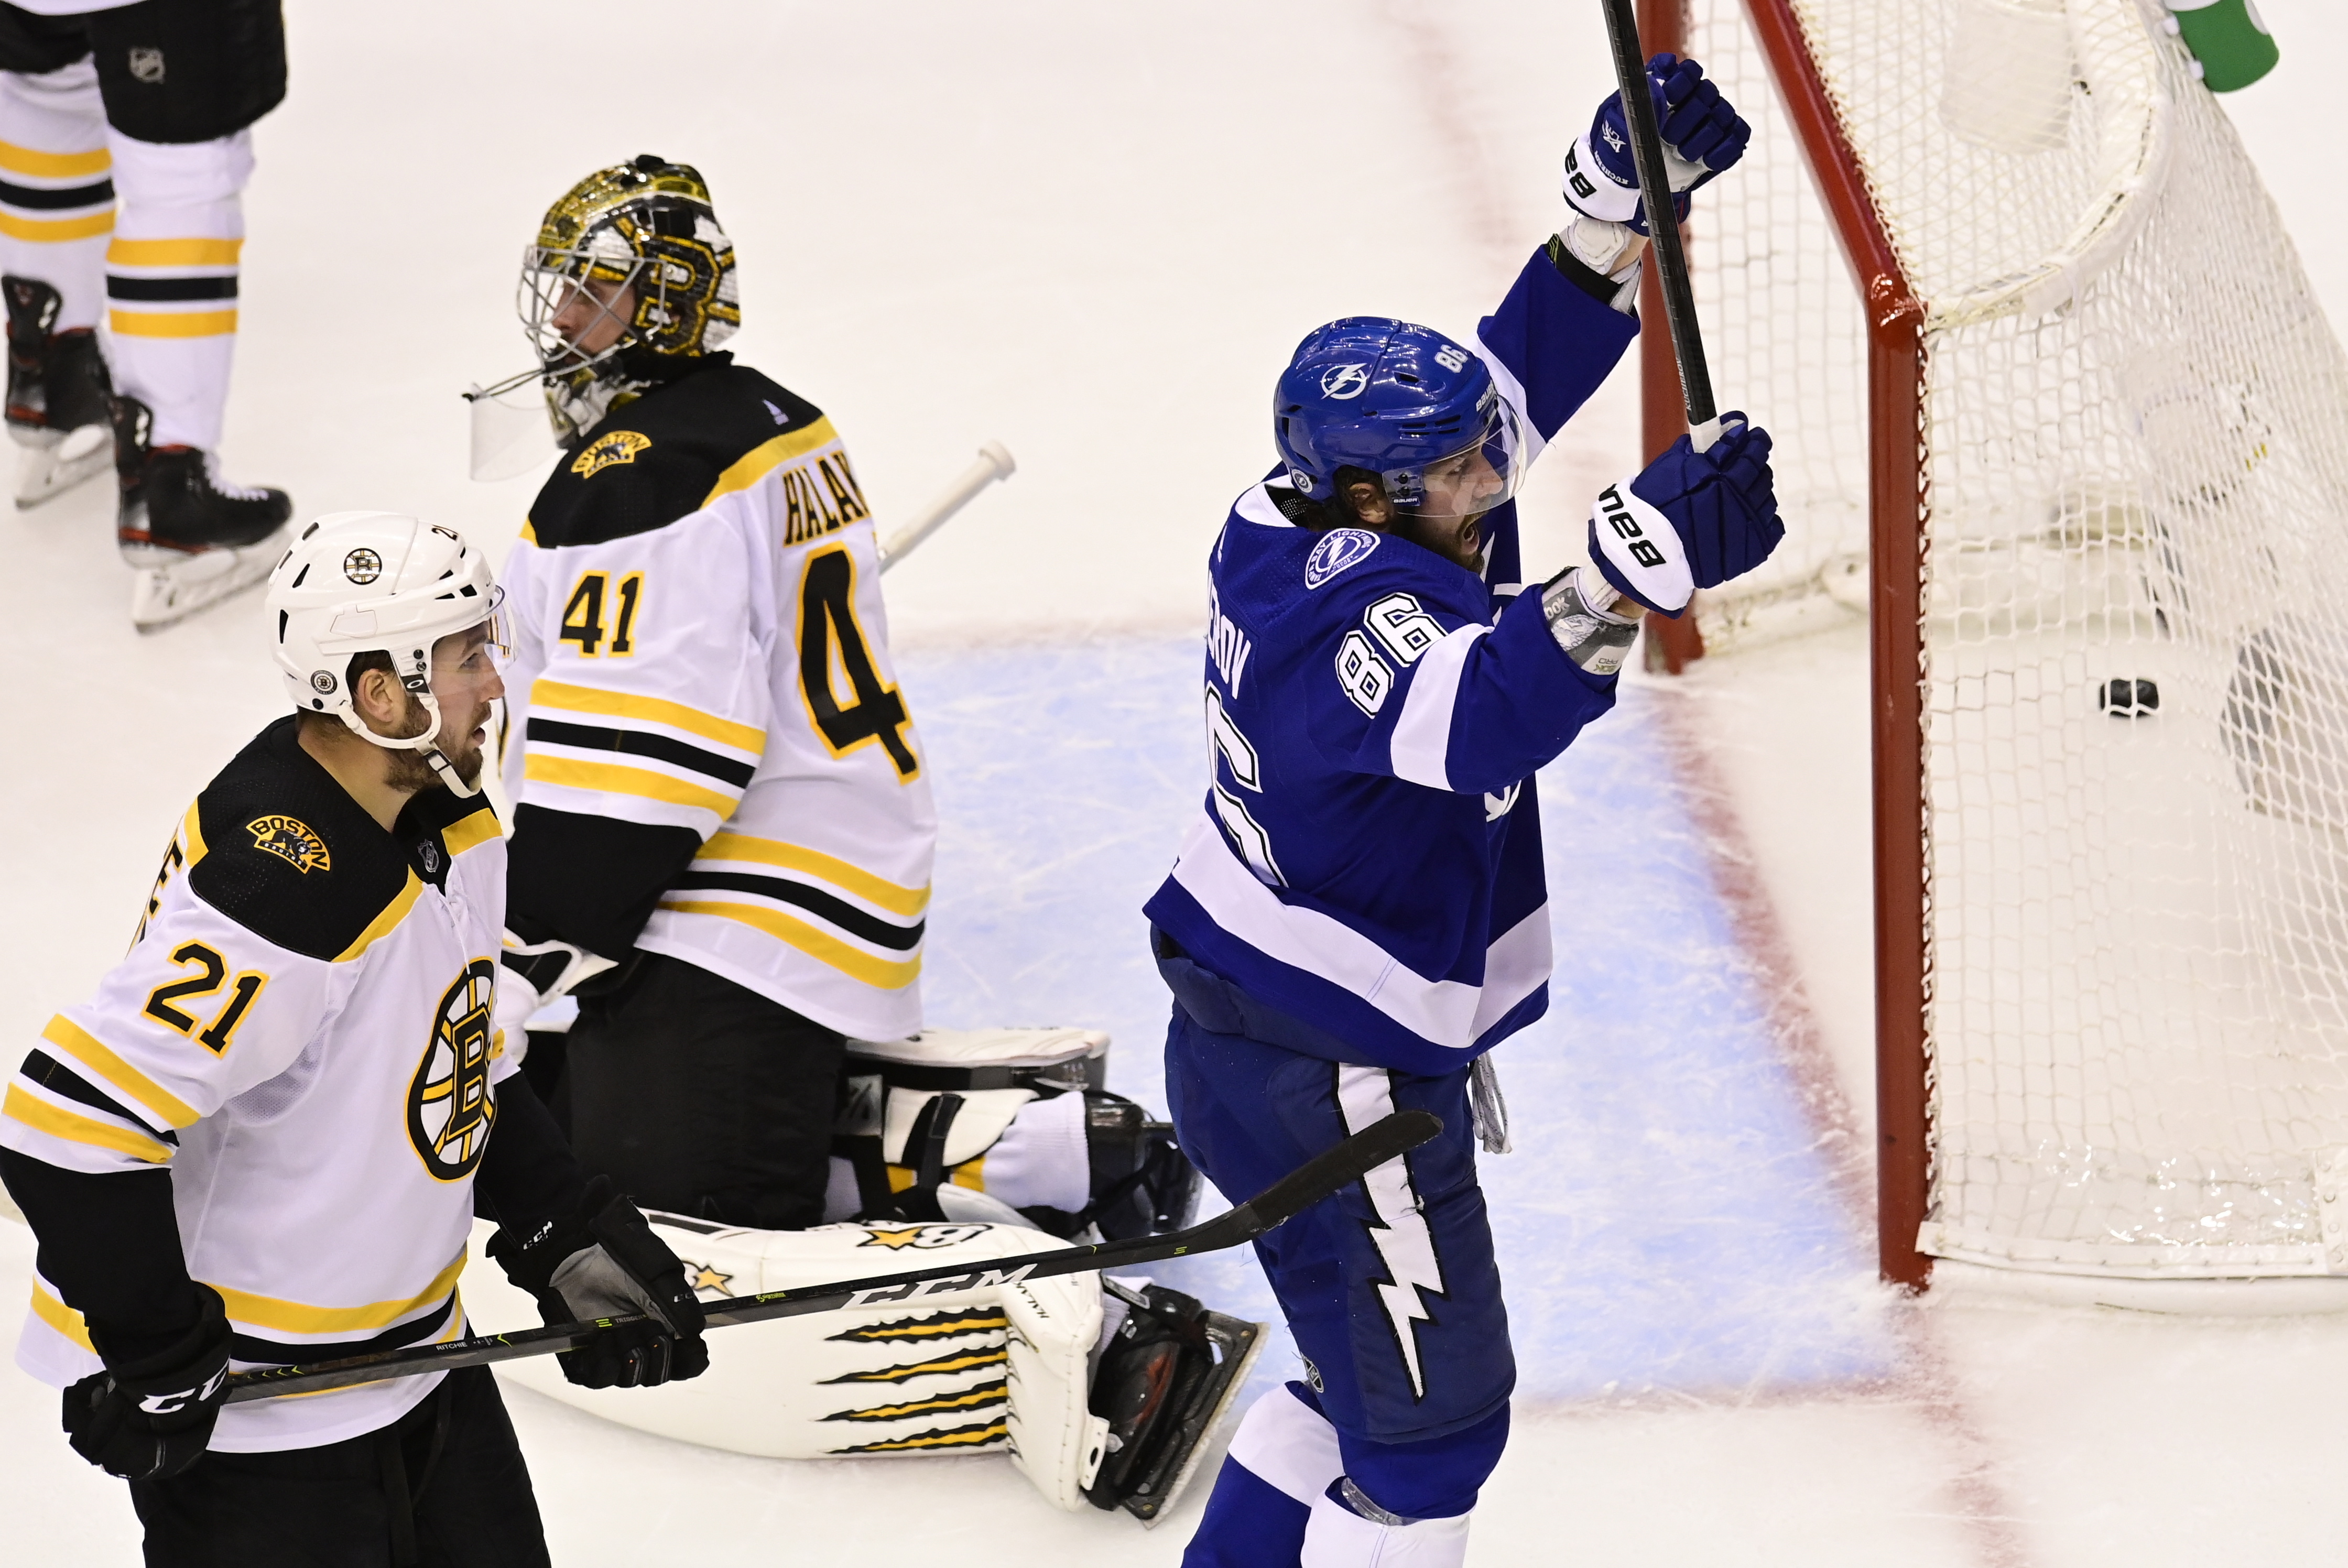 Goalie Jaroslav Halak set to move on, leaving Bruins' net even